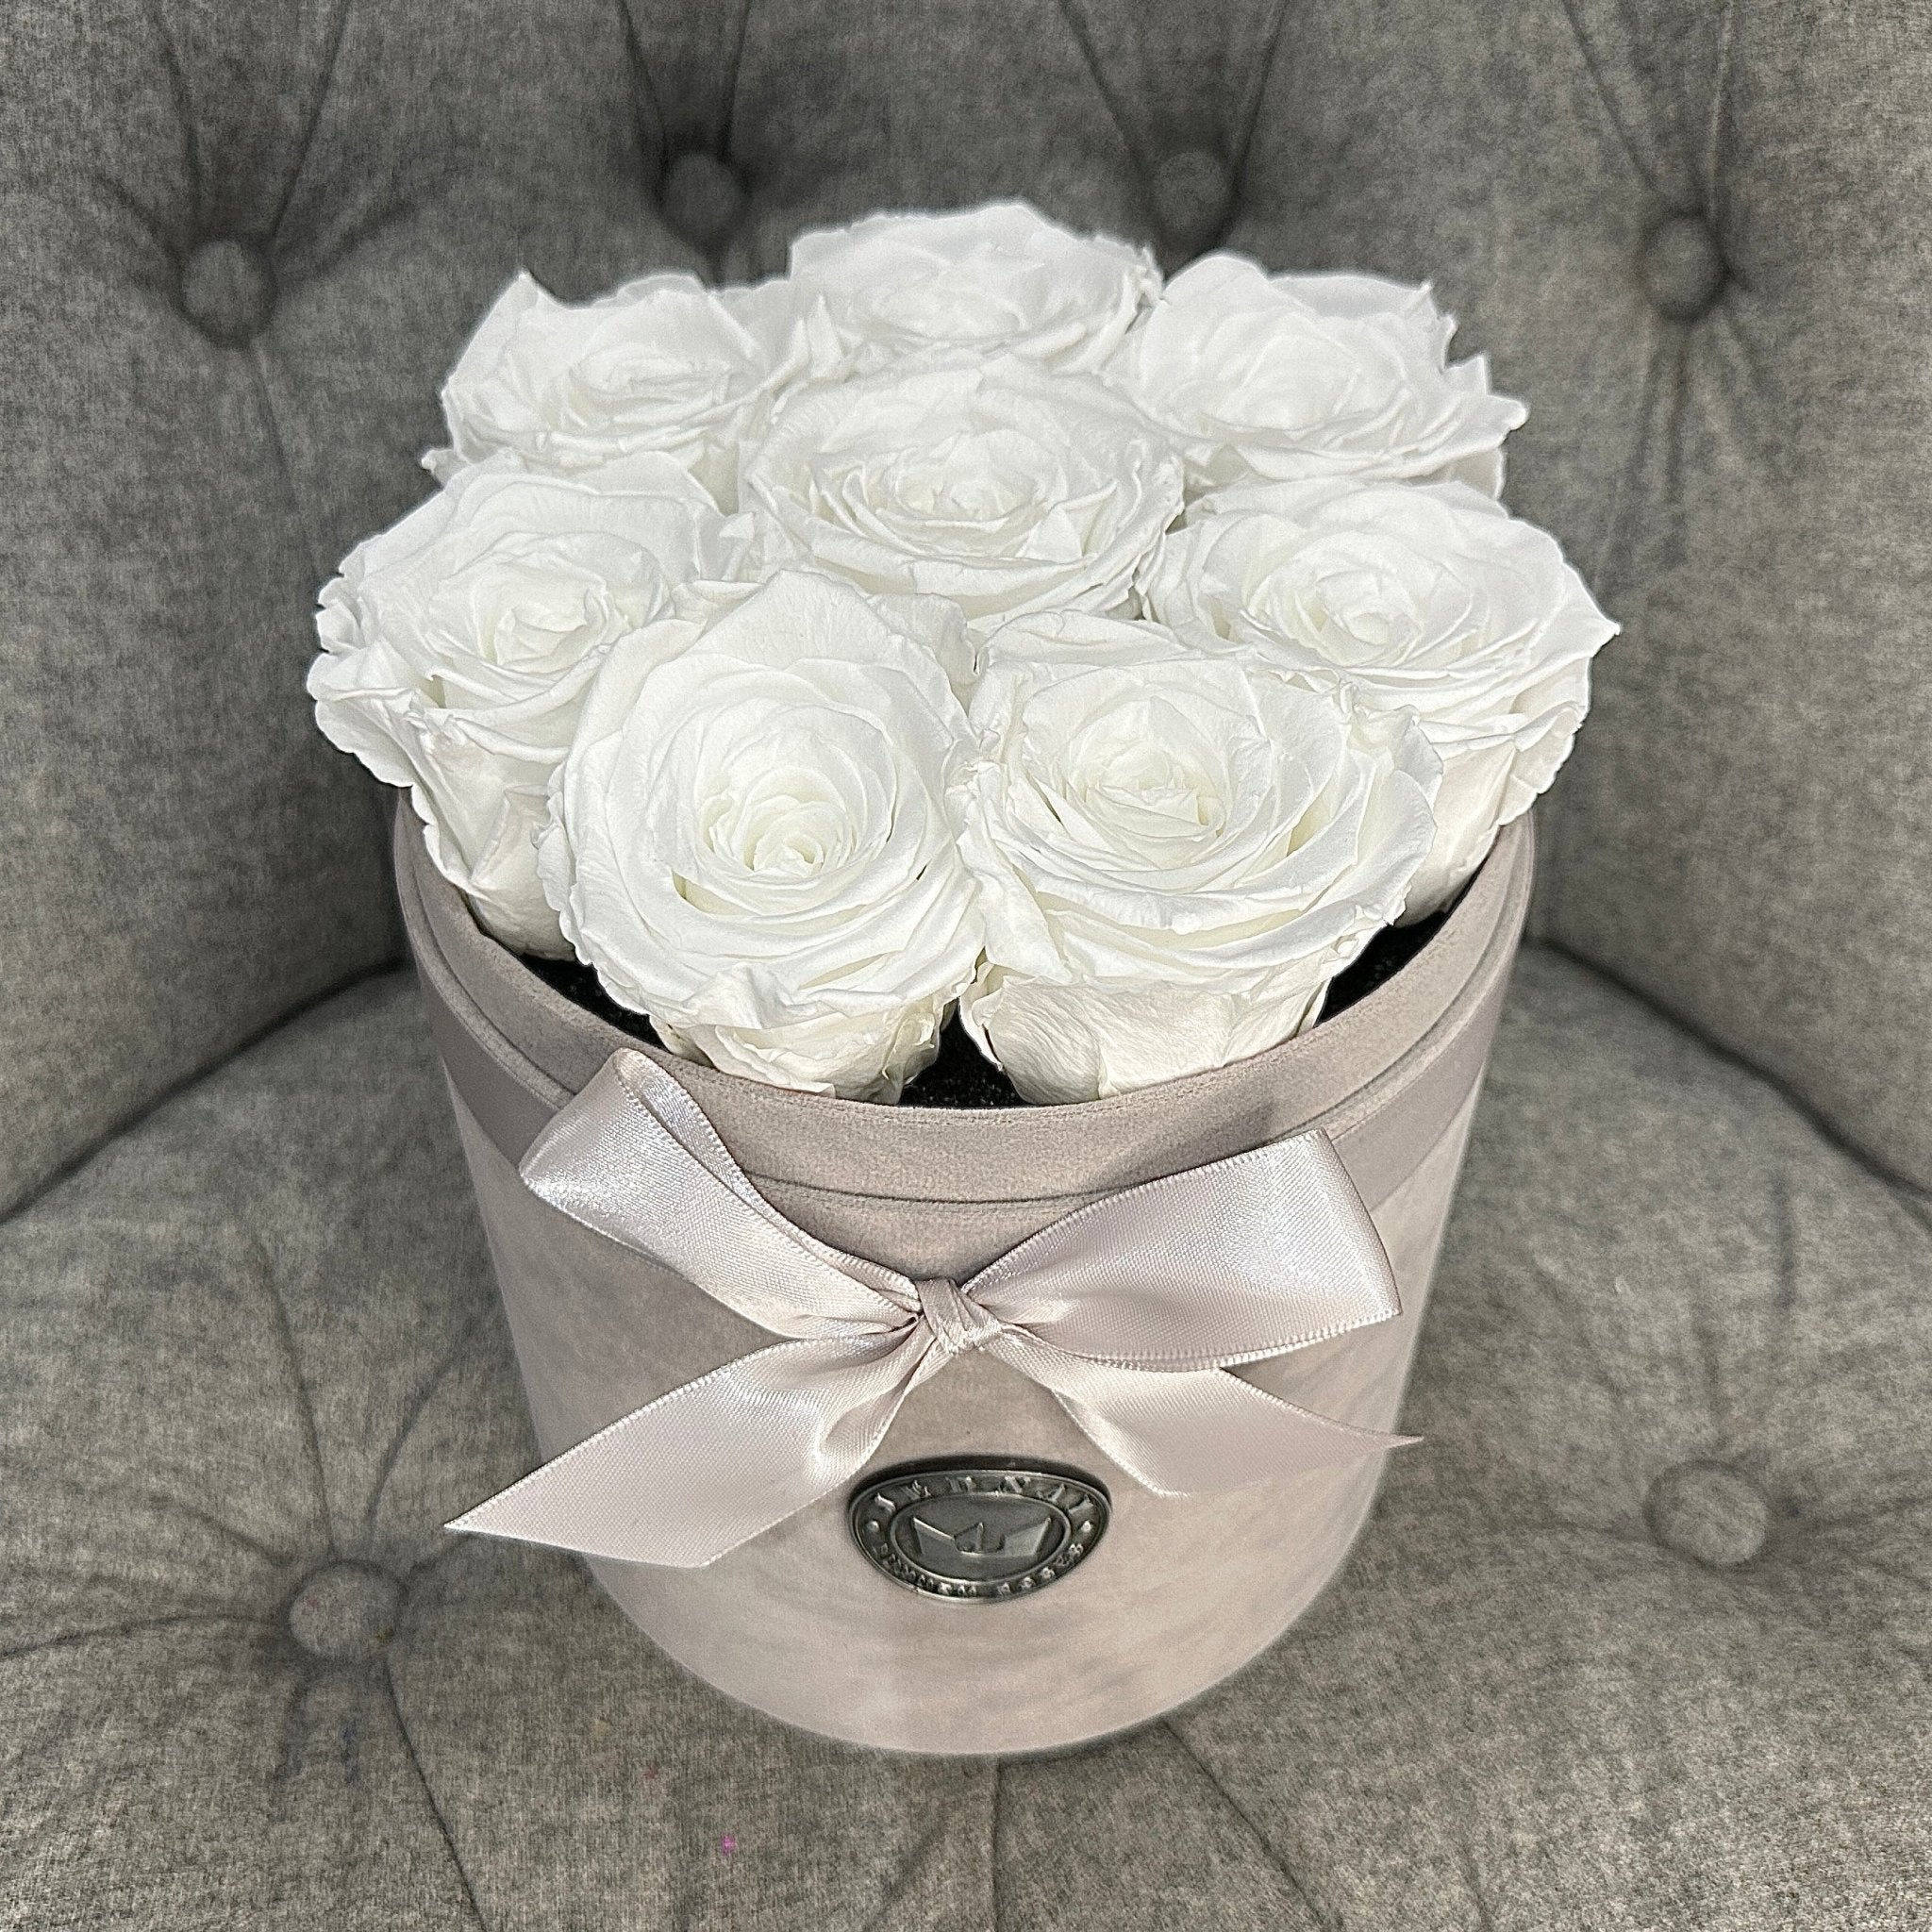 Medium Grey Suede Forever Rose Box - Angel White Eternal Roses - Jednay Roses